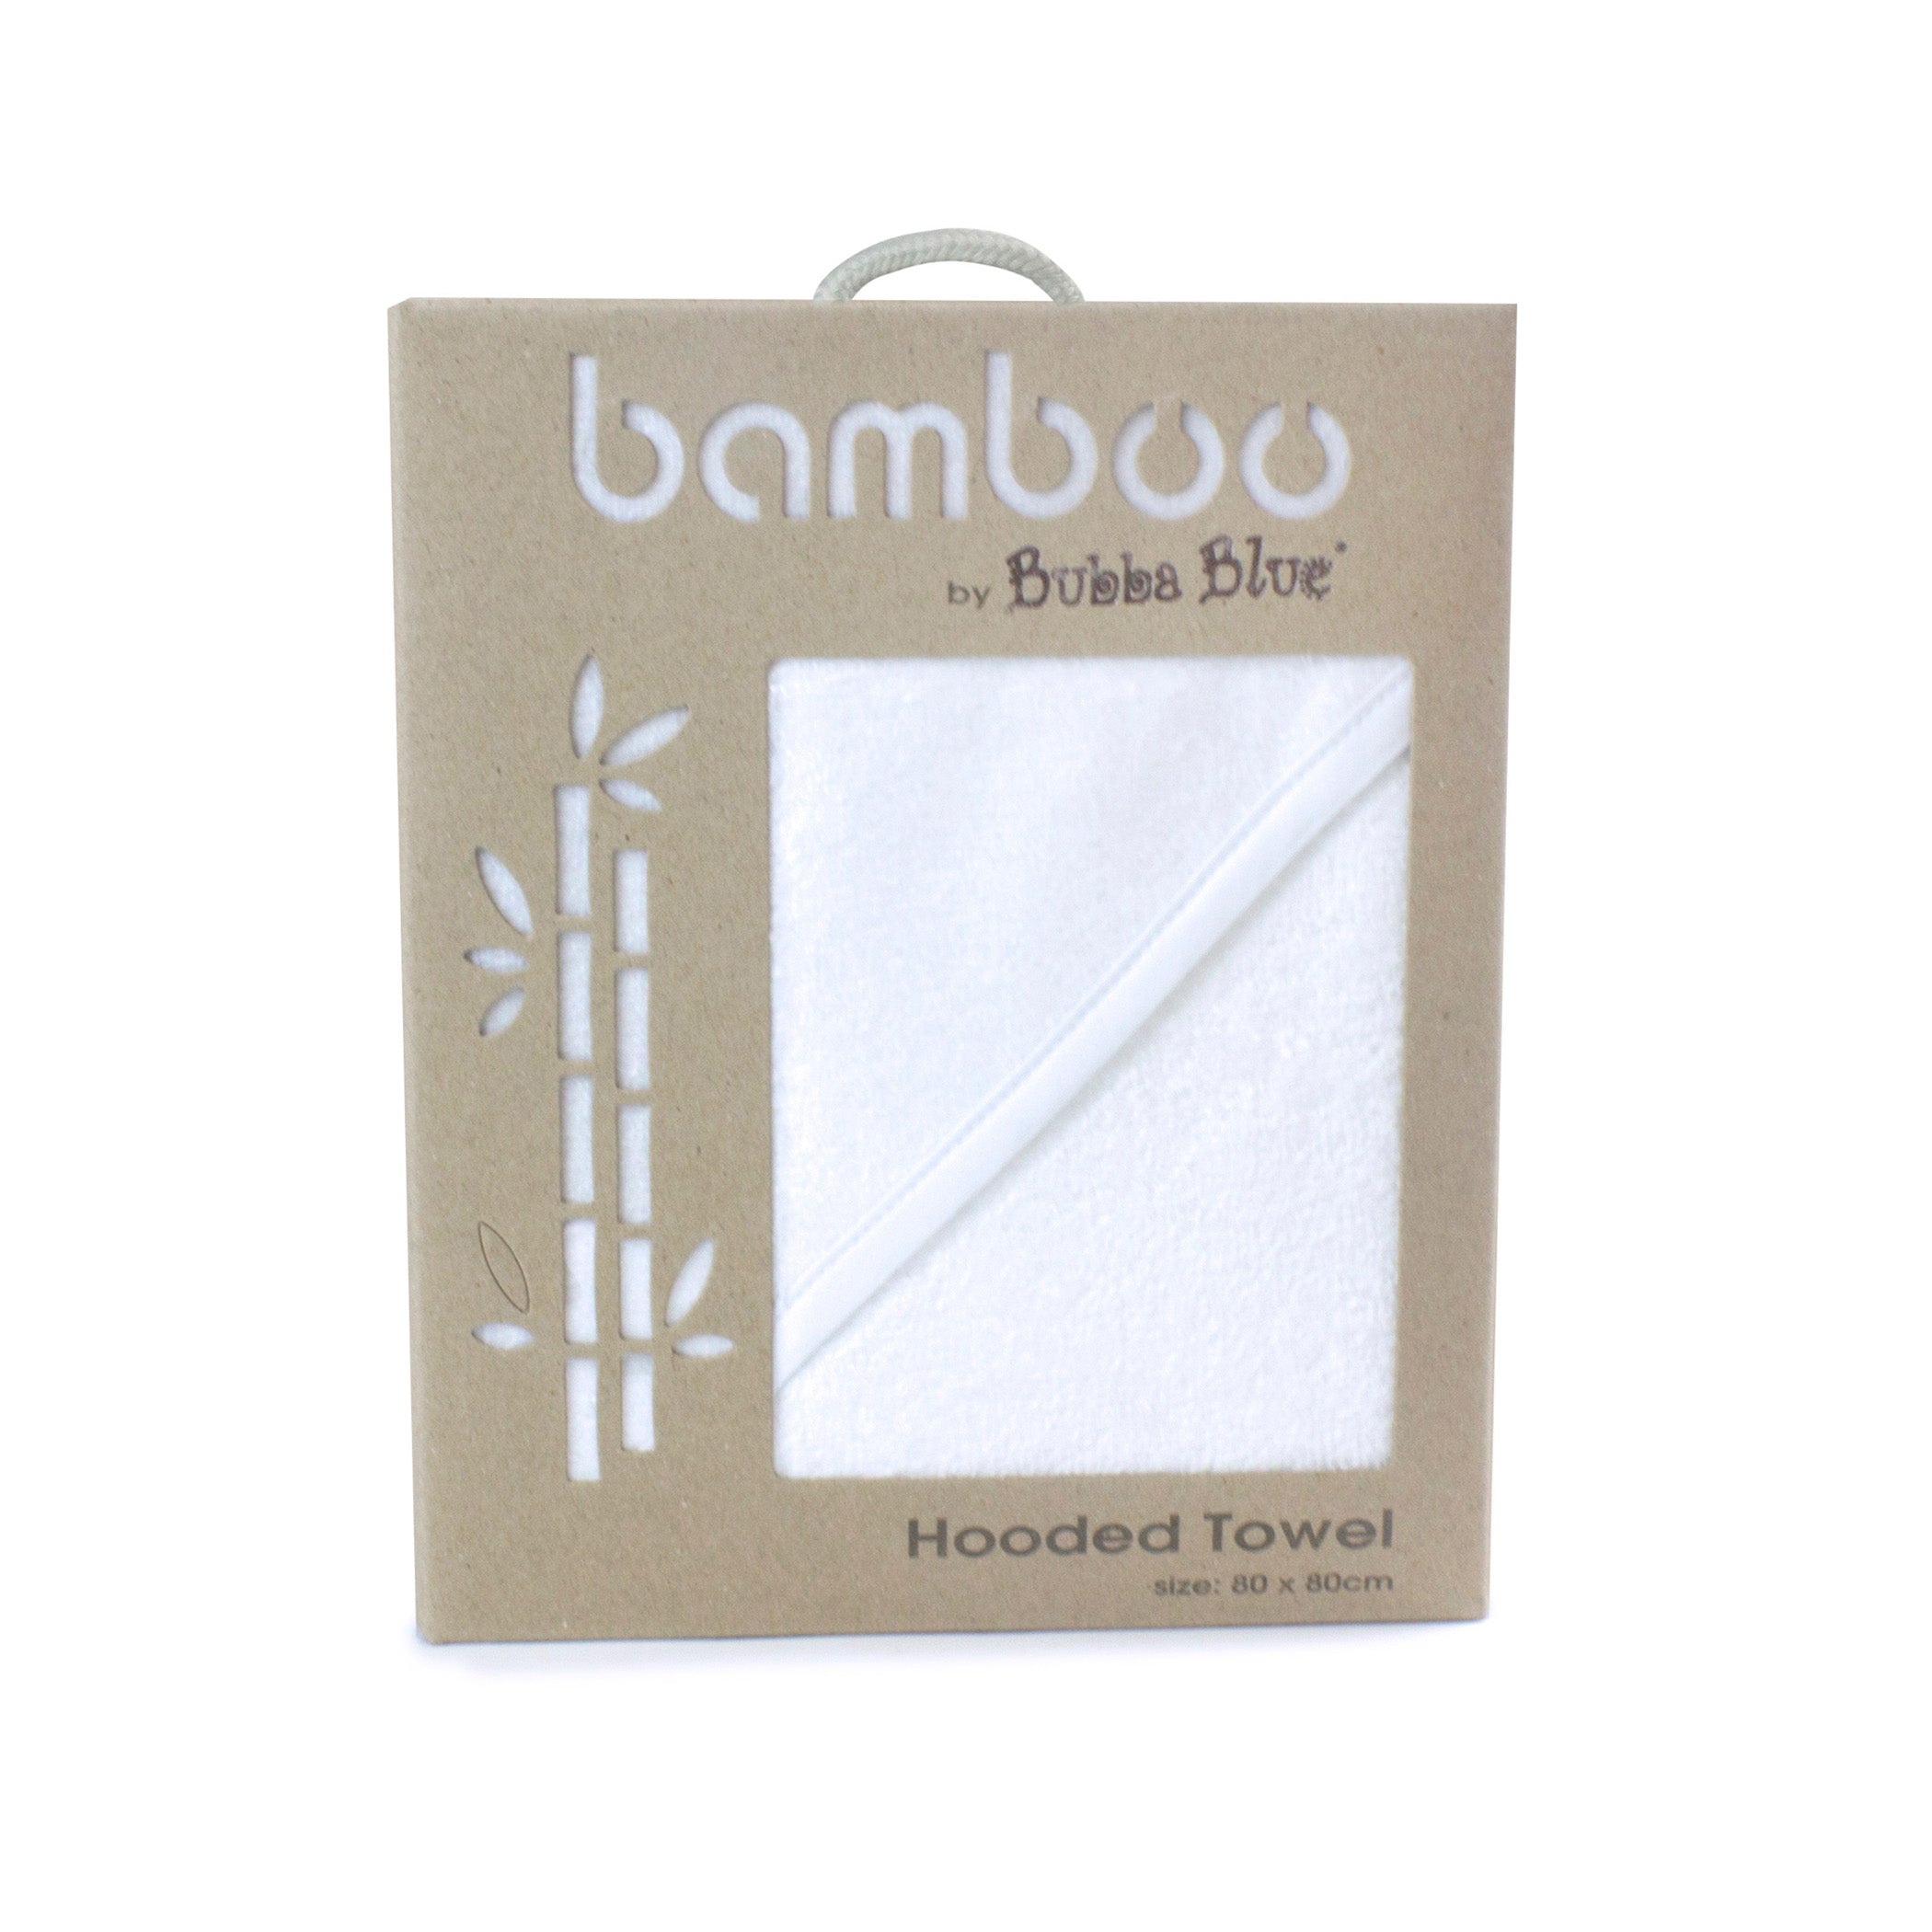 Bamboo White Hooded Towel - Bubba Blue Australia